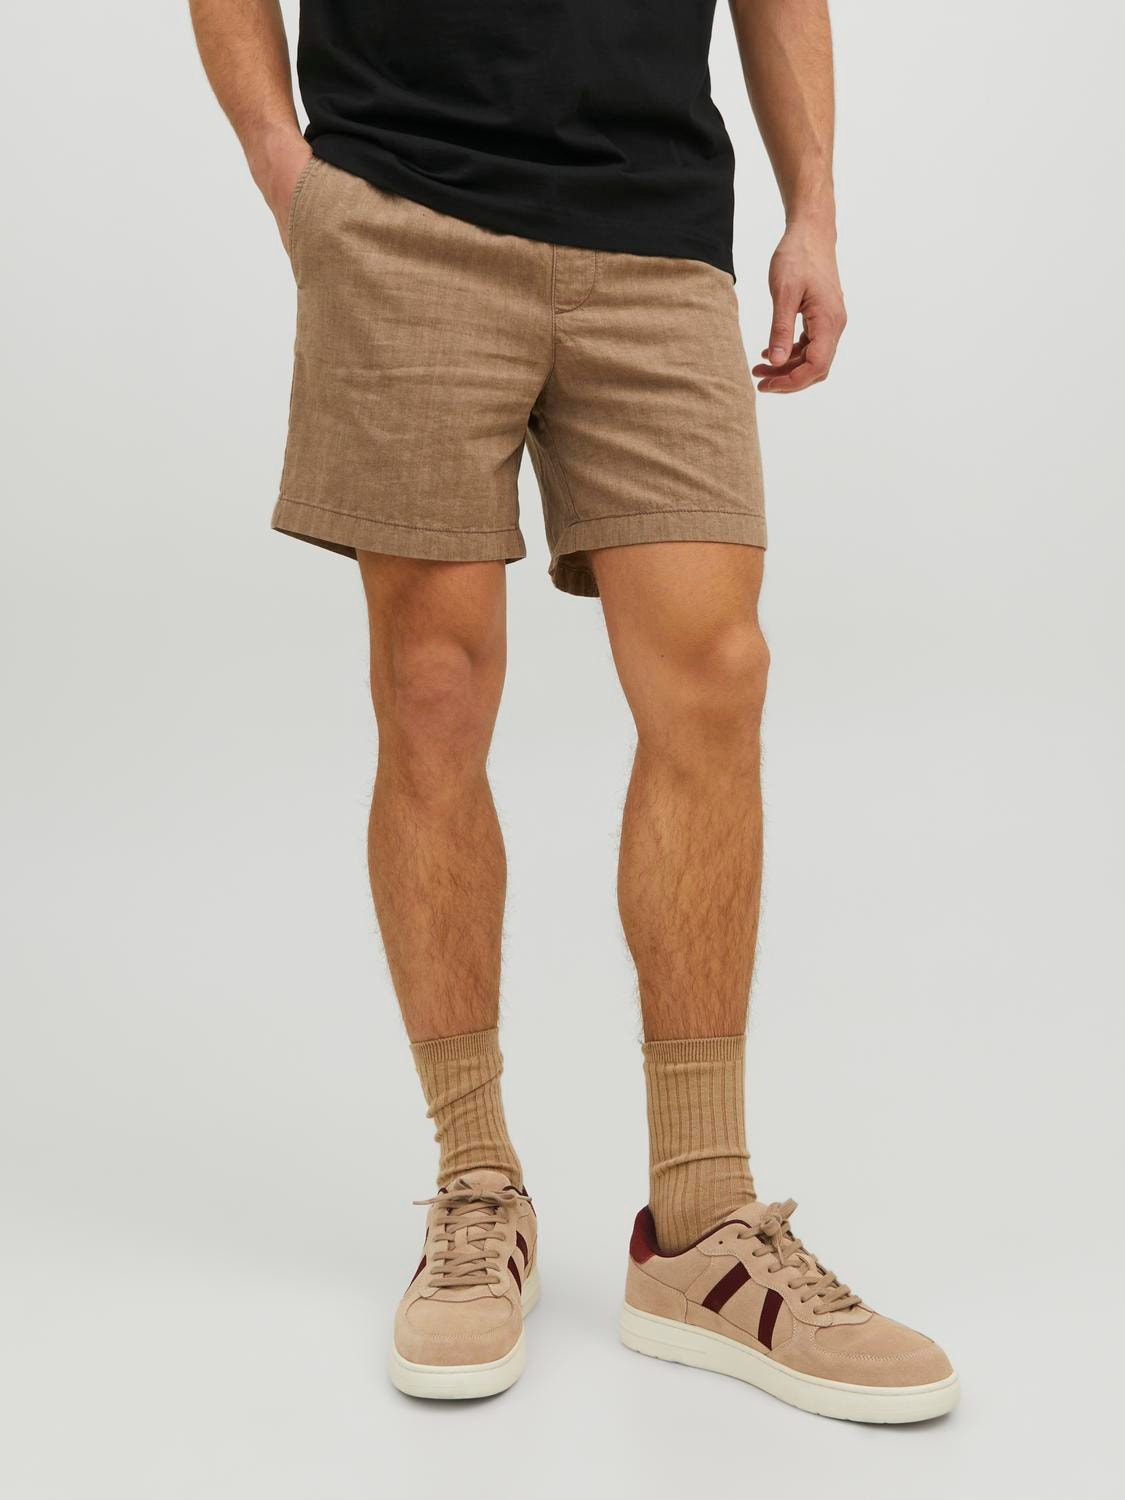 Jack & Jones Regular Fit Shorts -Falcon - 12234596